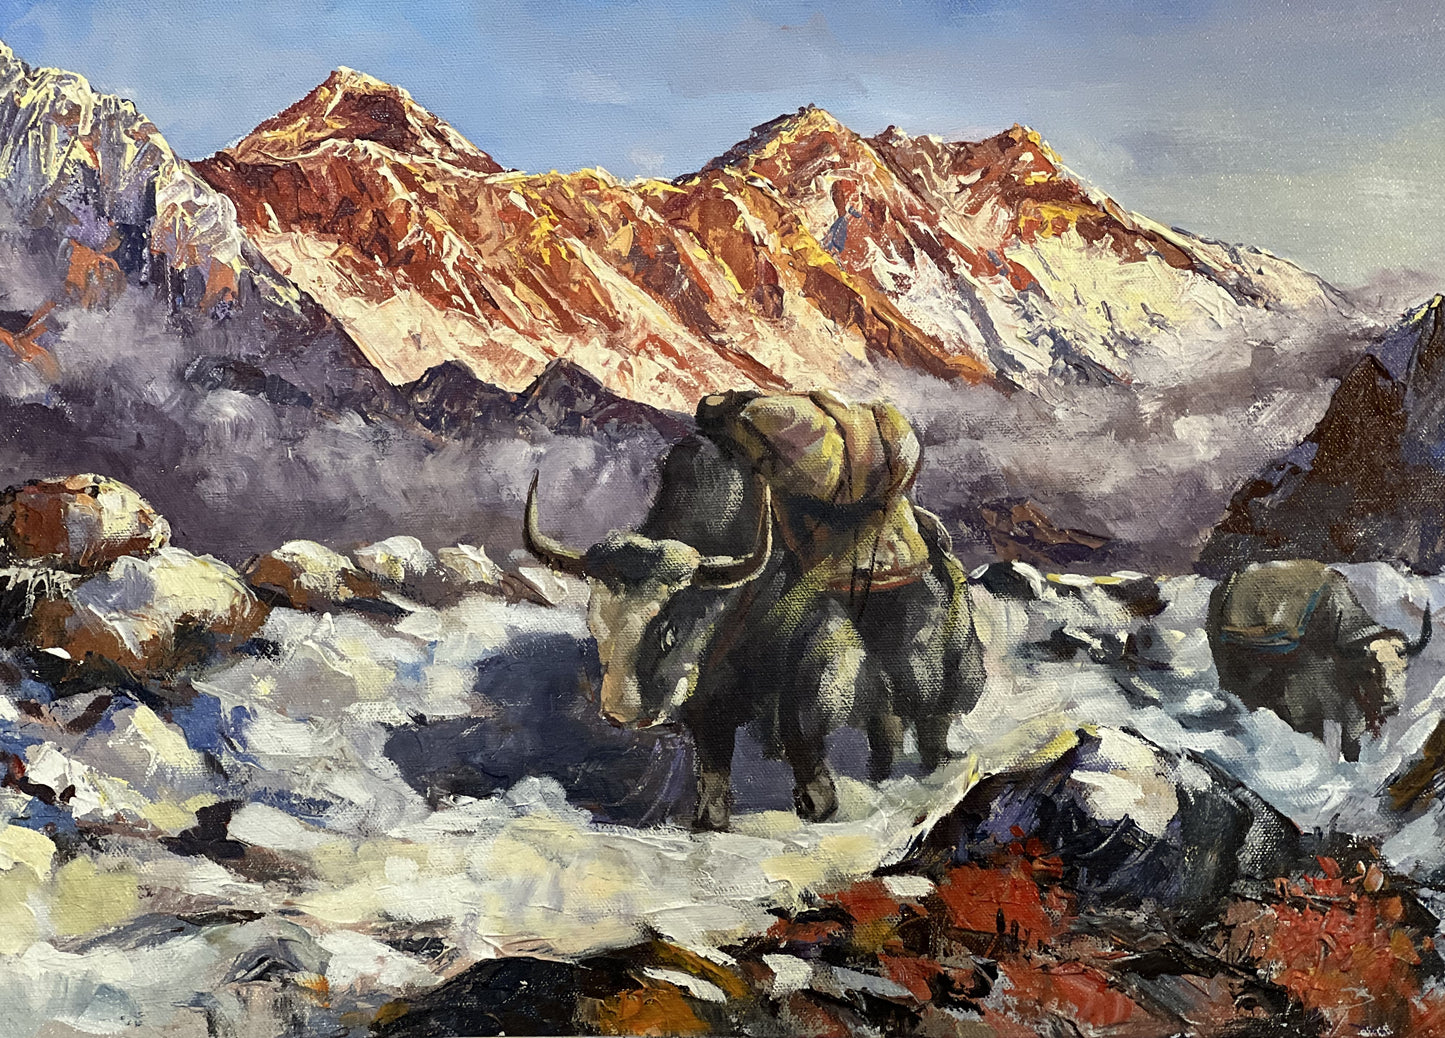 Mount Everest Nepal Himalaya / Acrylic Landscape Painting On Canvas/ High Quality Palette Knife Painting